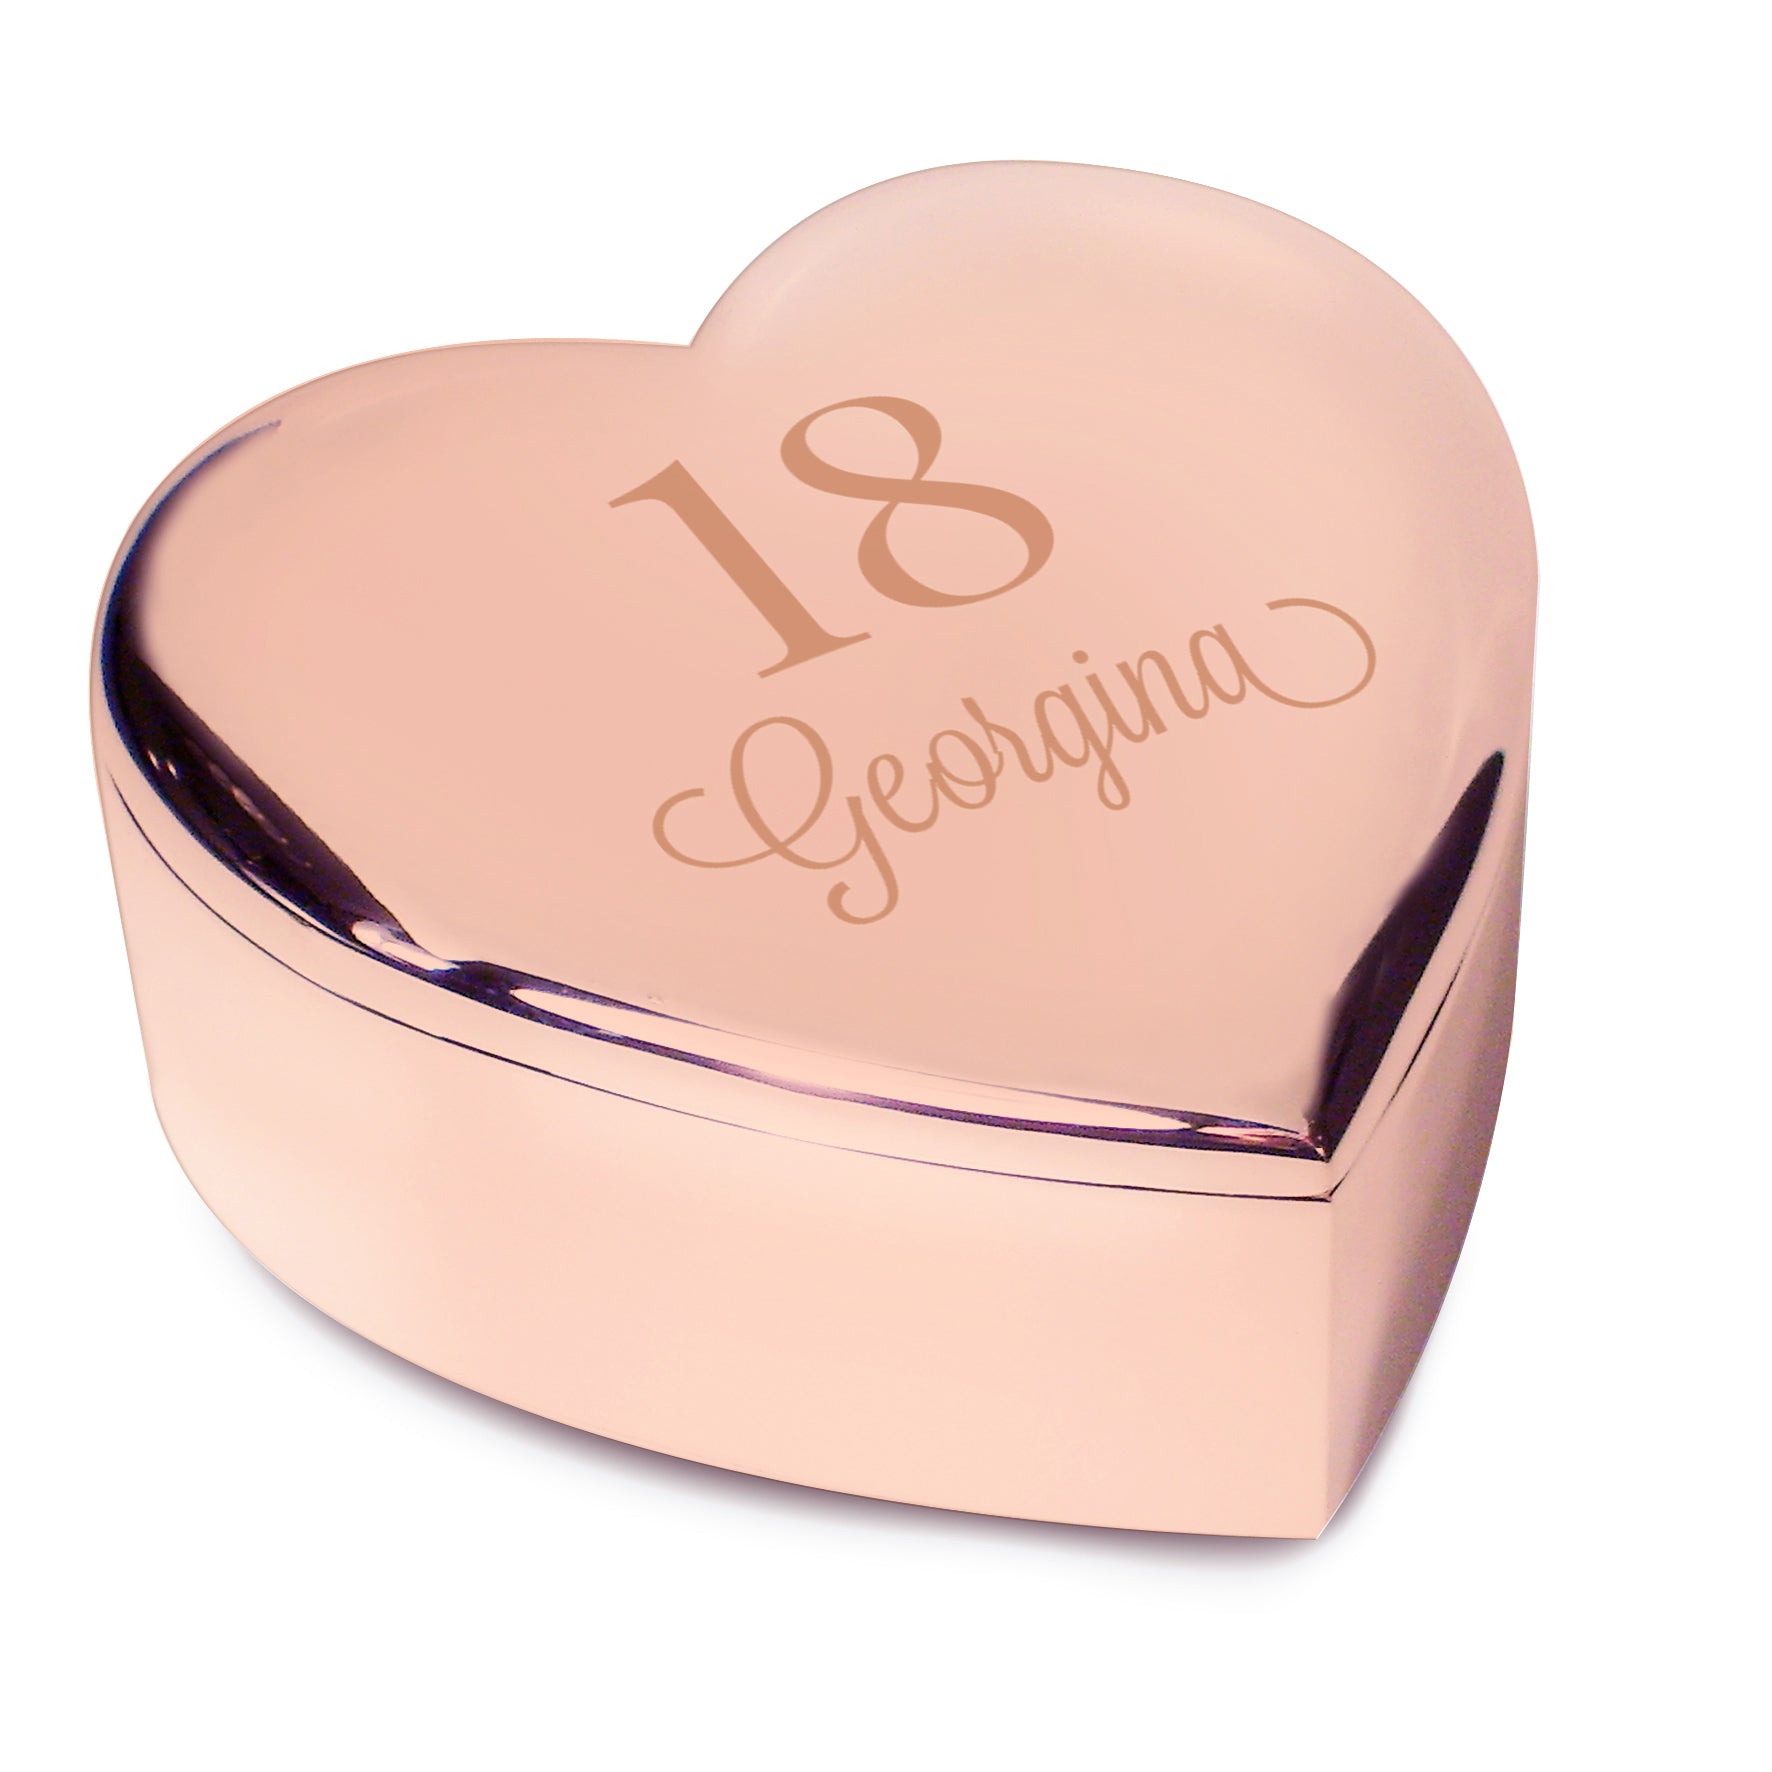 Personalised Rose Gold Heart Trinket Box